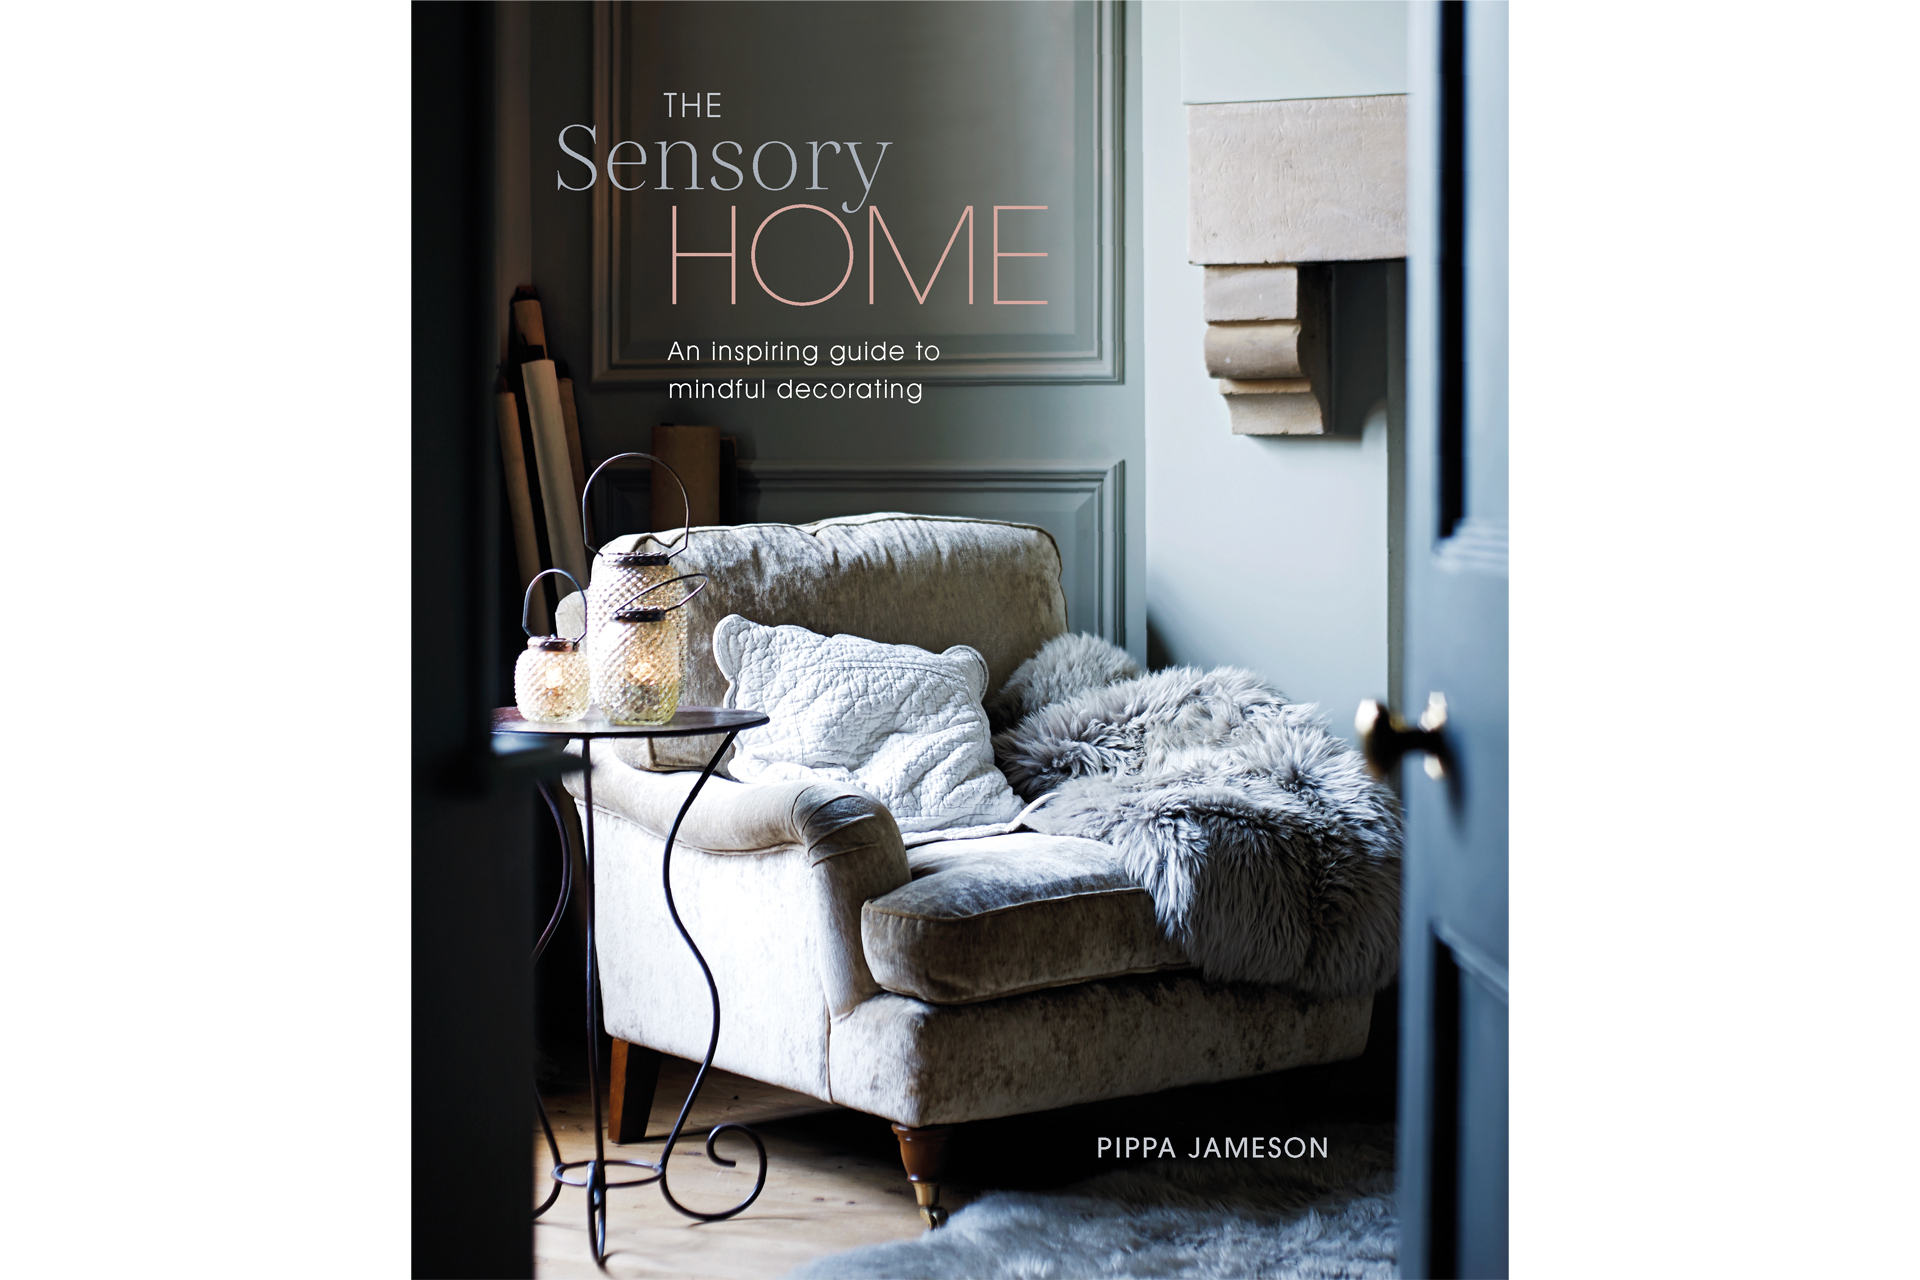 The Sensory Home by Pippa Jameson